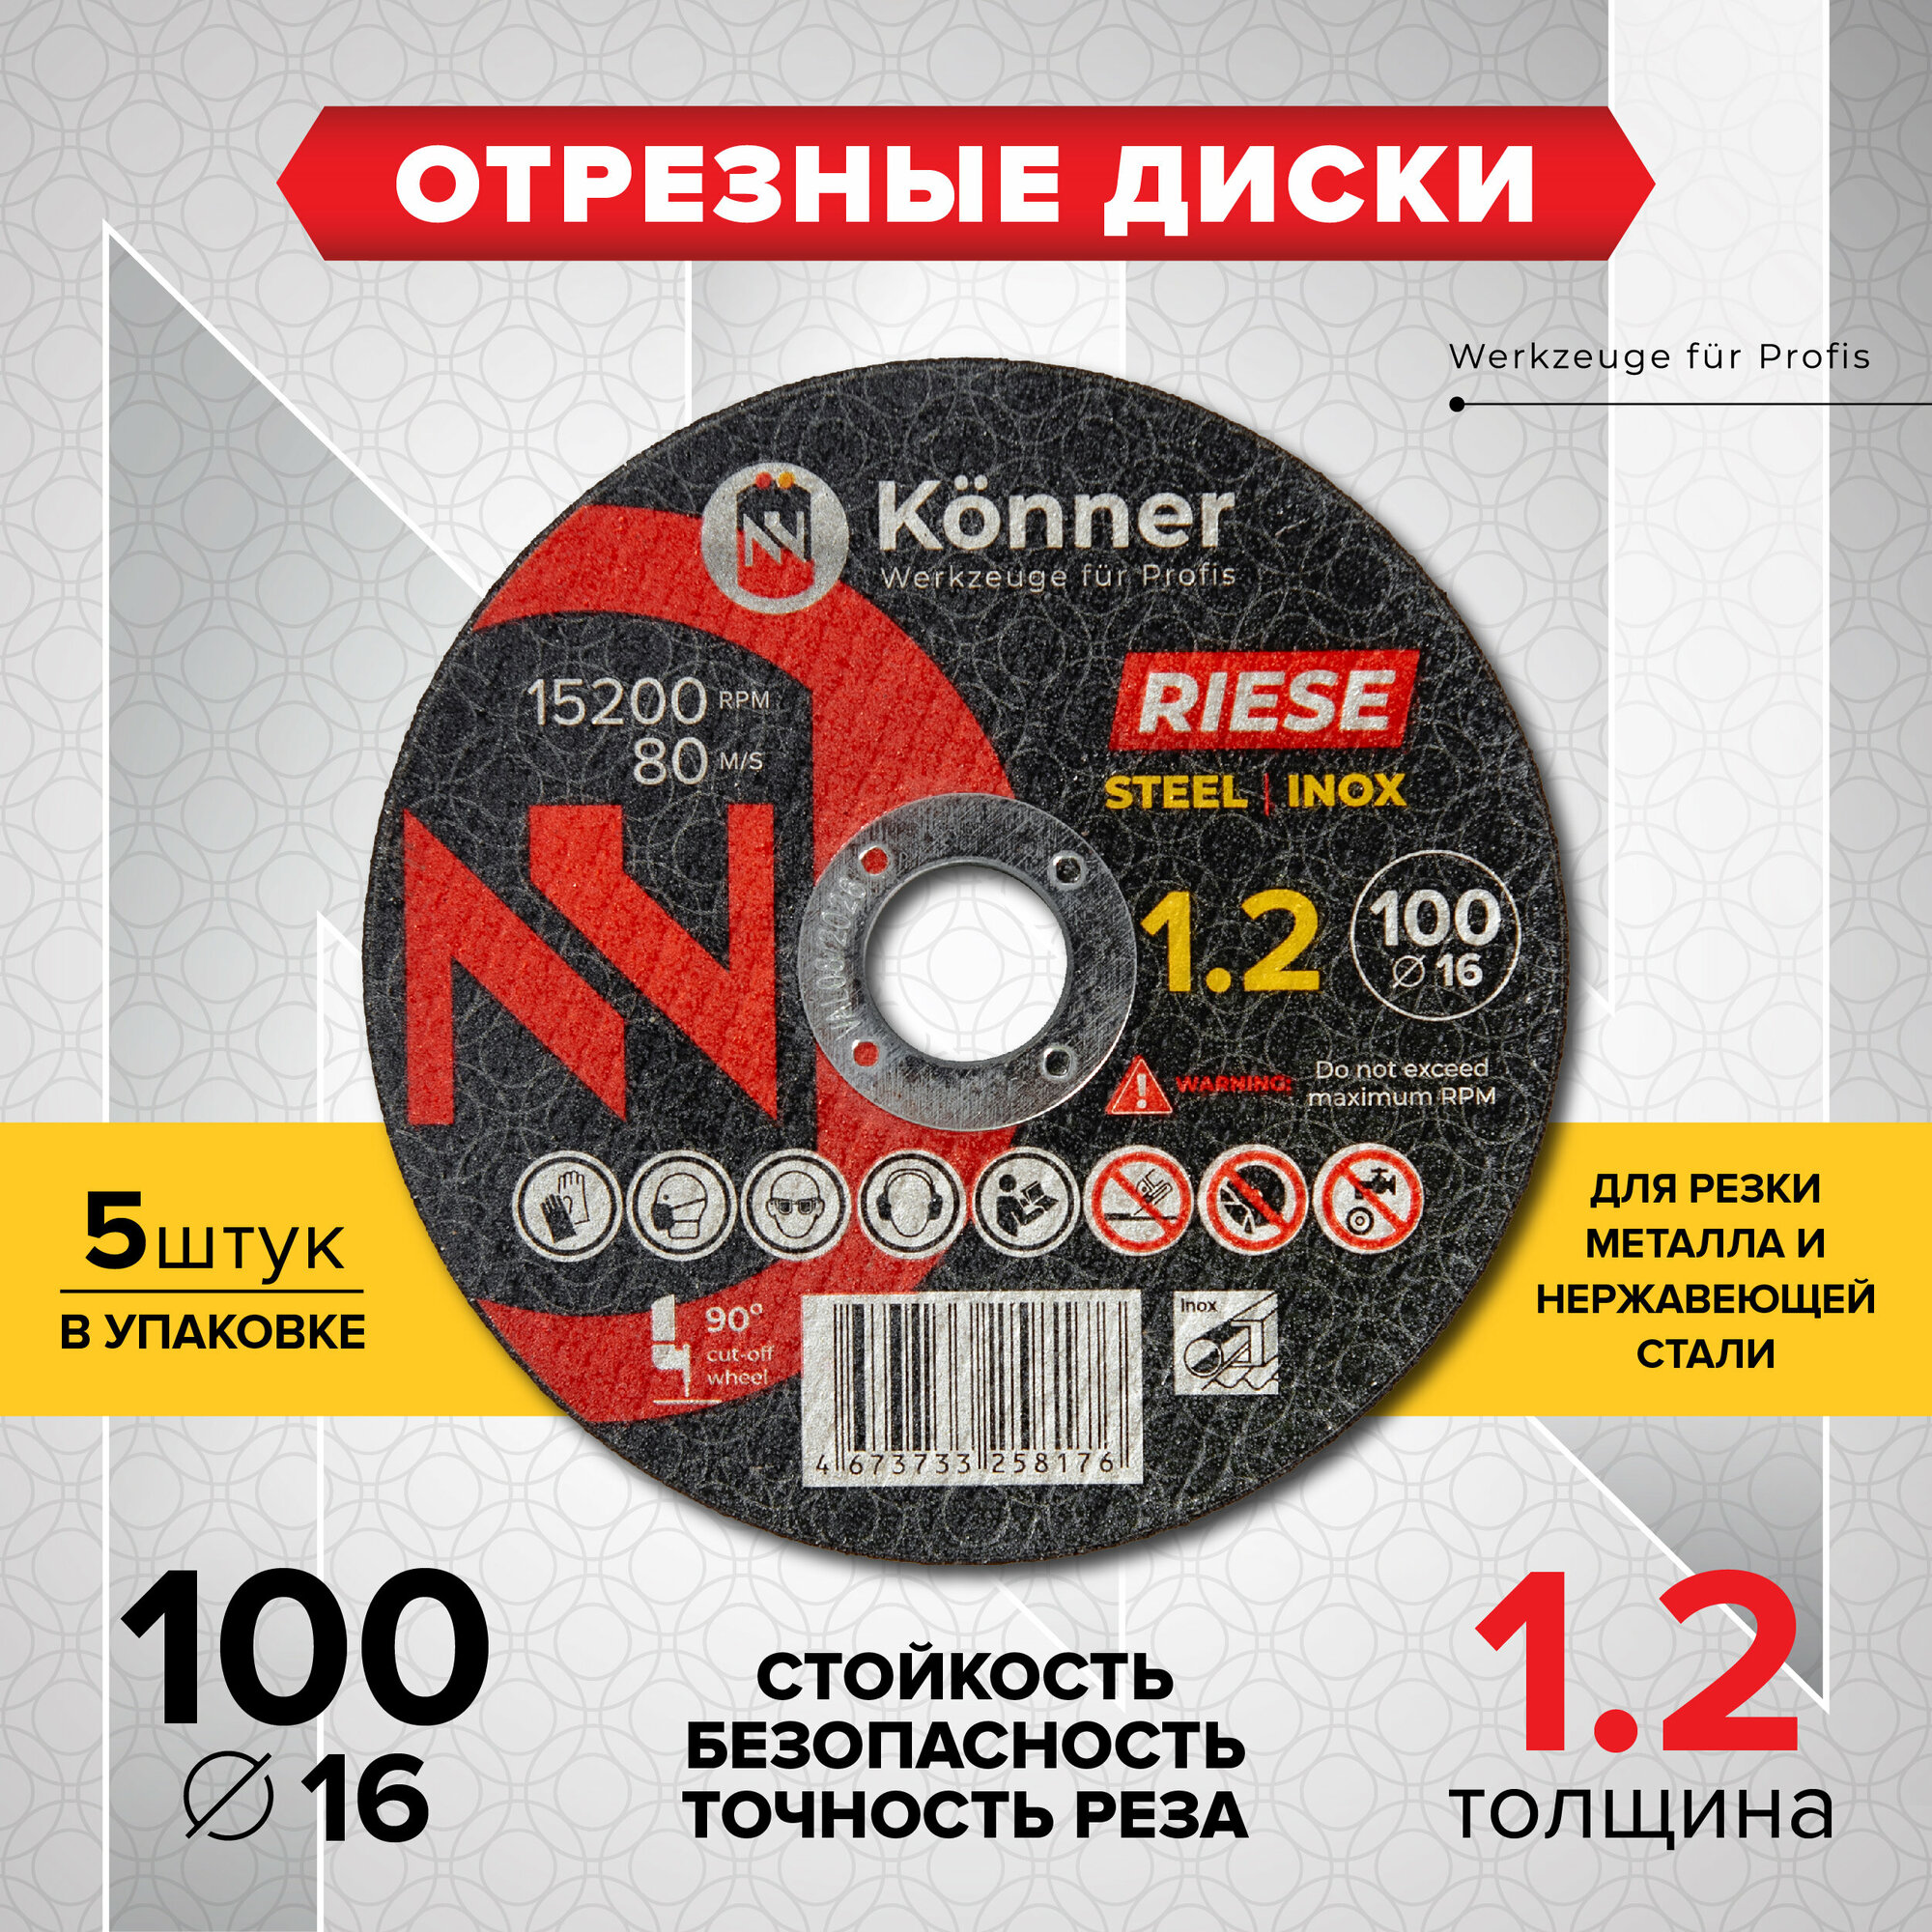 Отрезные диски KONNER RIESE 100x1.2x16 (5 шт)